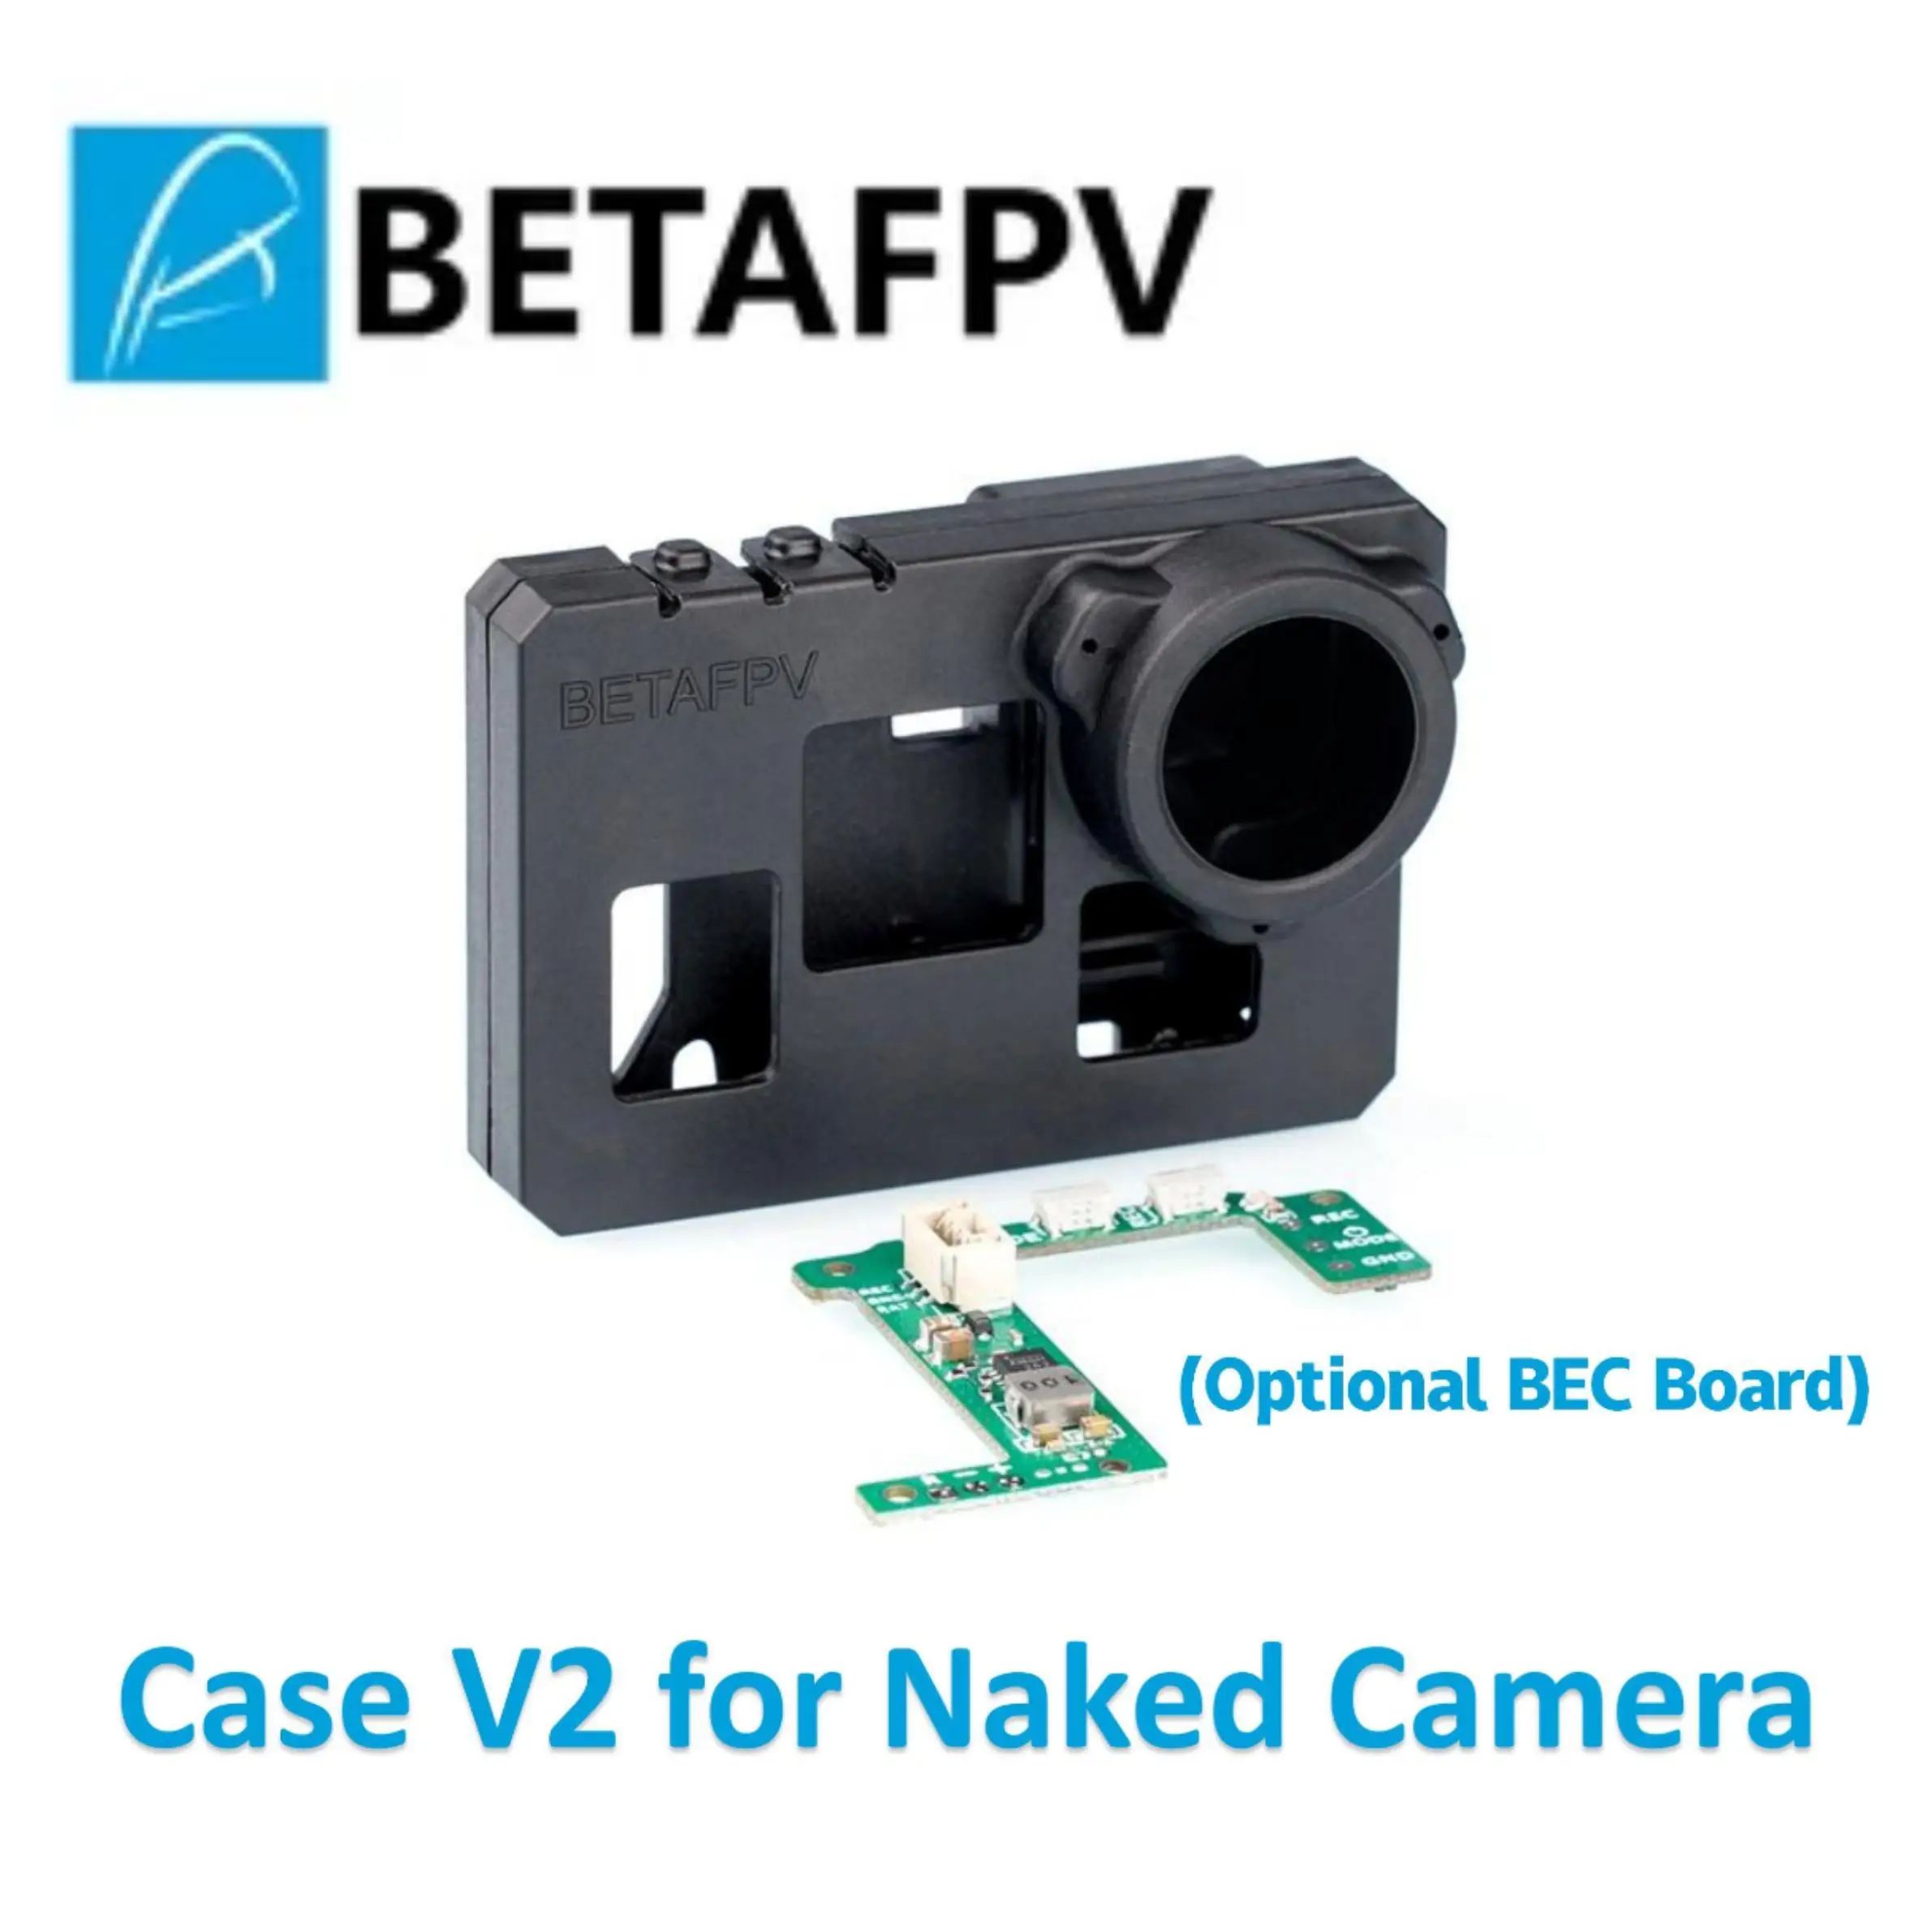 Casing BETAFPV V2 untuk Kamera Telanjang dengan Casing Pelindung Papan BEC untuk GoPro Hero 6/7 Ringan Bahan Tahan Lama - 2